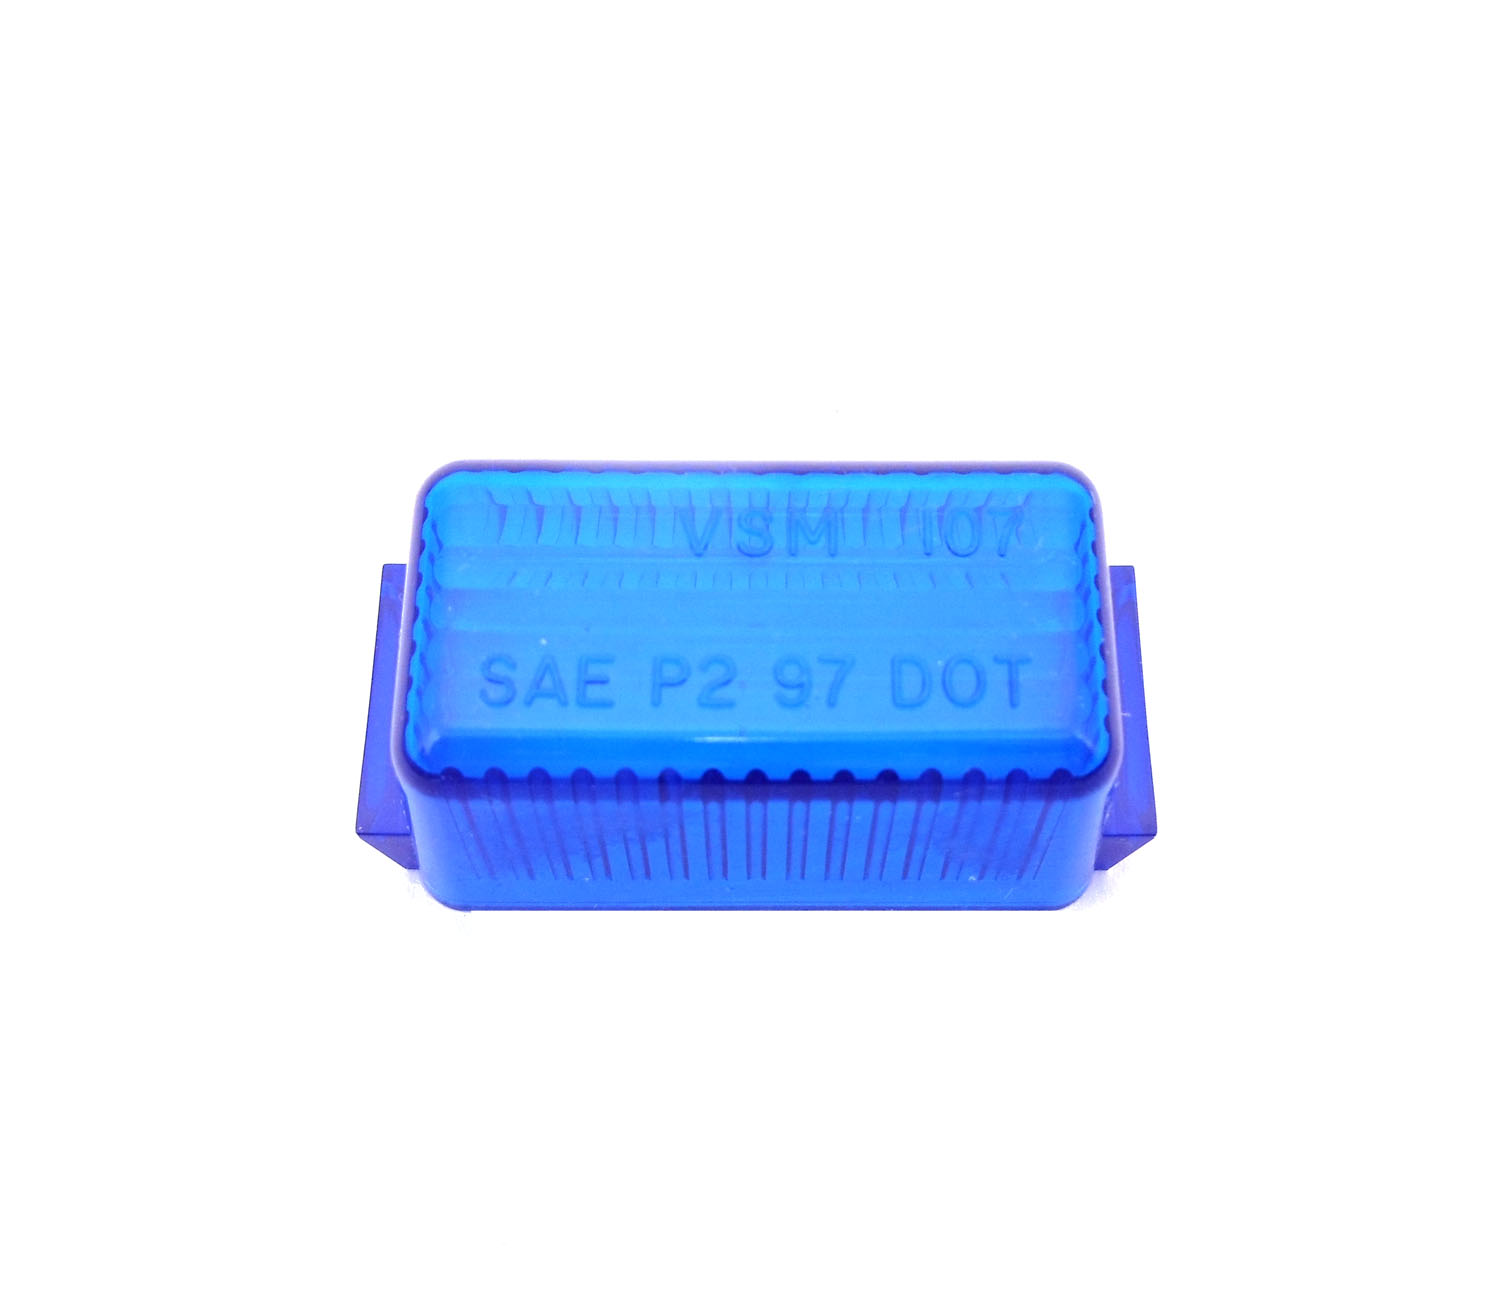 BARJAN 1-3/4" X 1" BLUE RECTANGULAR REPLACEMENT LENS (VSM 107 SAE P2 97 DOT)